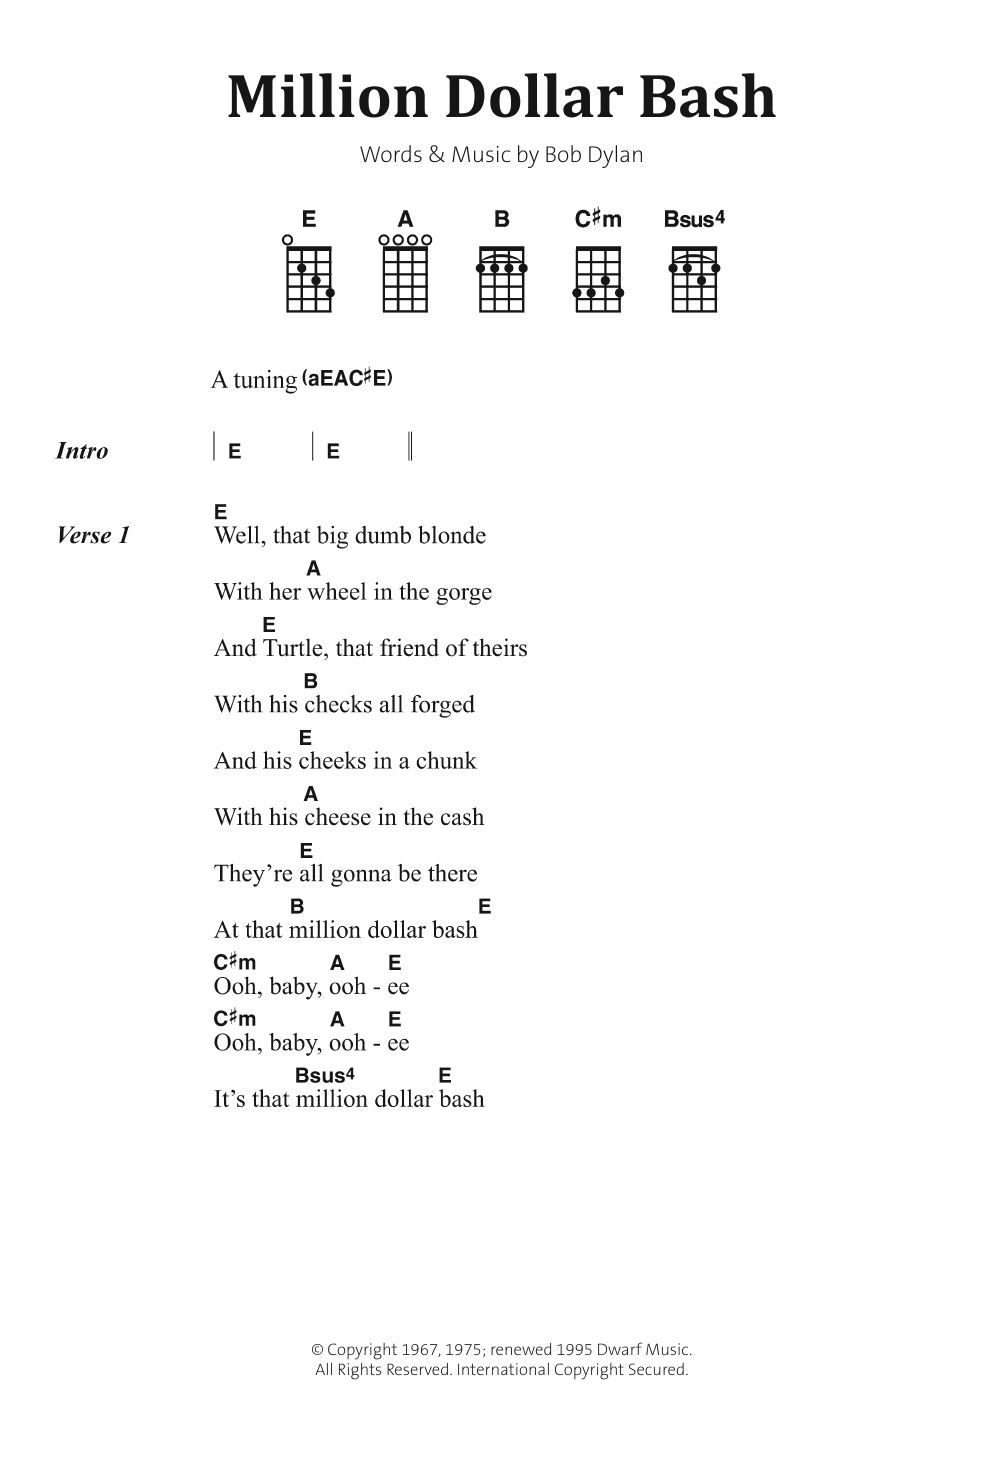 Download Bob Dylan Million Dollar Bash Sheet Music and learn how to play Ukulele Lyrics & Chords PDF digital score in minutes